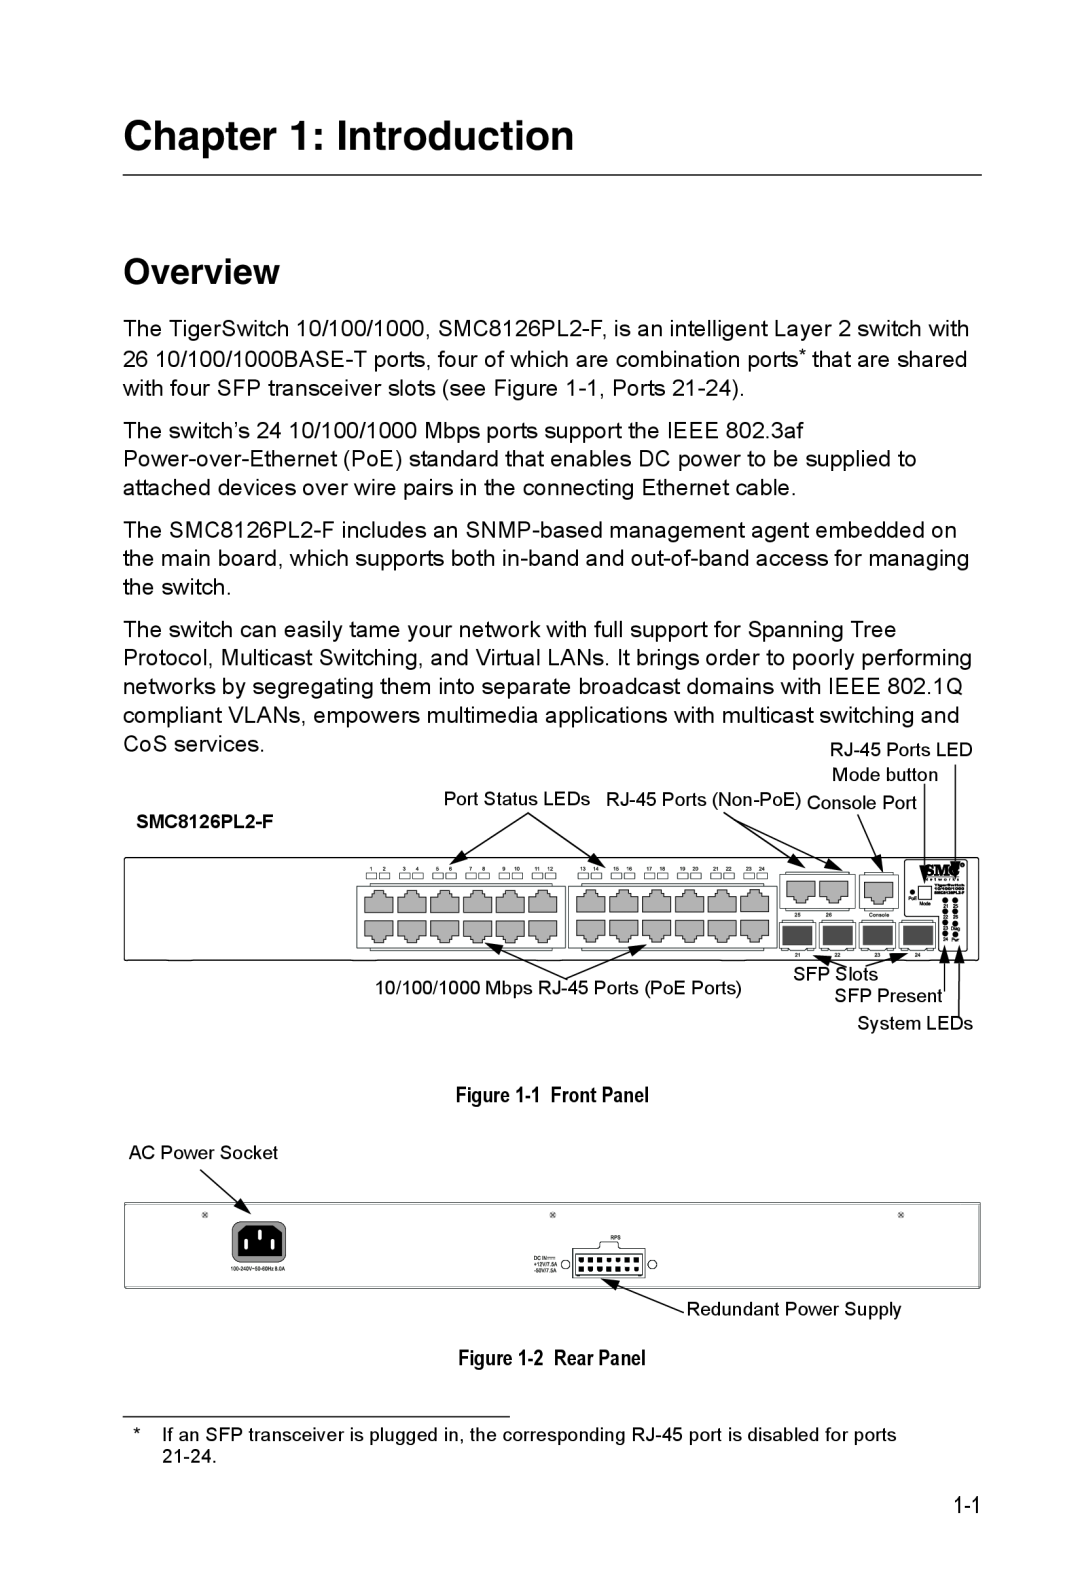 SMC Networks SMC8126PL2-F manual 1Front Panel, 2Rear Panel, Port Status LEDs RJ-45Ports Non-PoEConsole Port, SFP Slots 